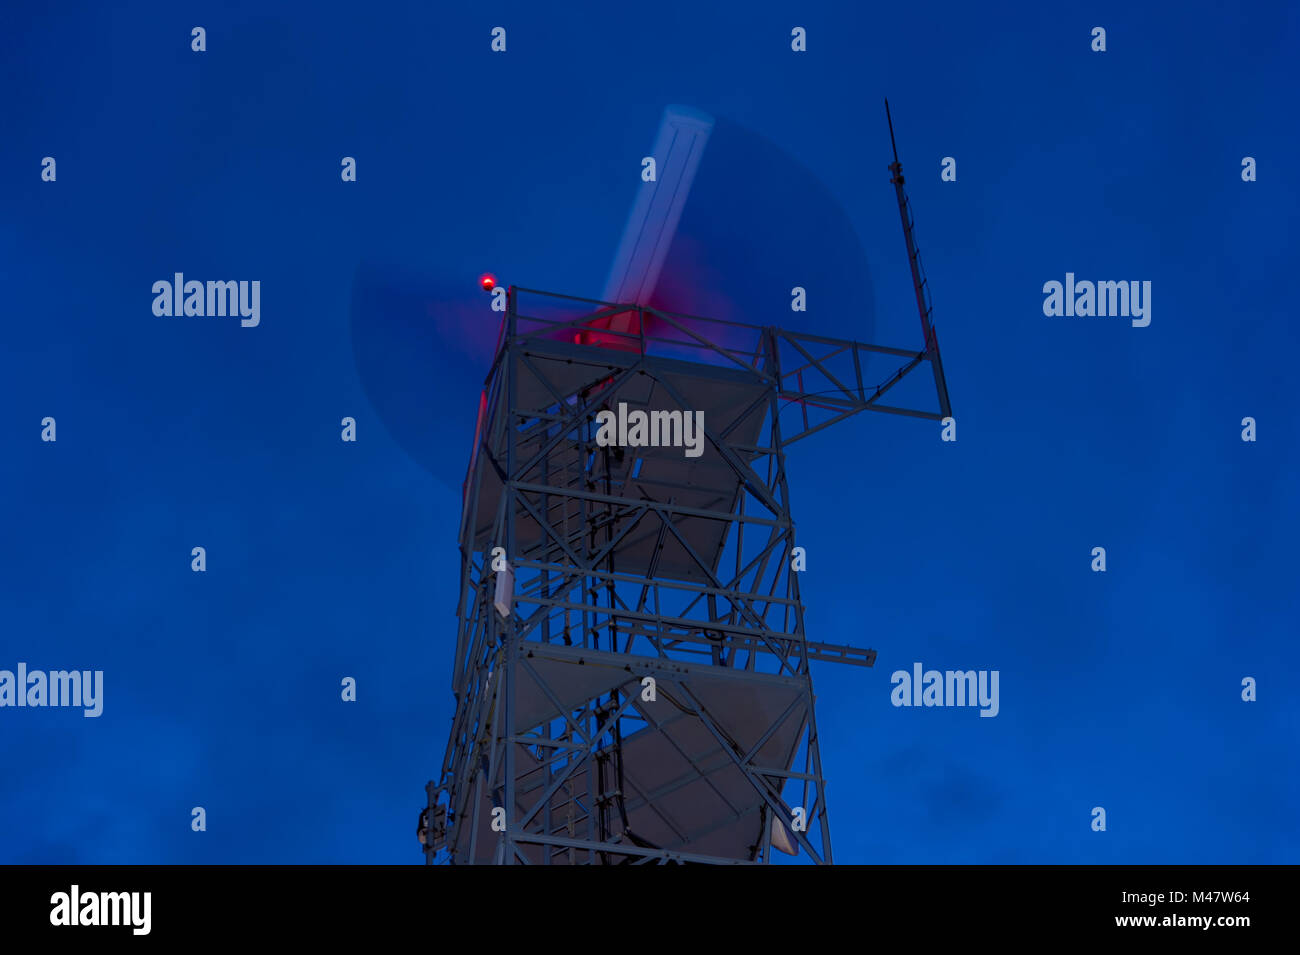 Radaranlagen Wetter- oder Meer Beobachtung. Nightshot. Stockfoto